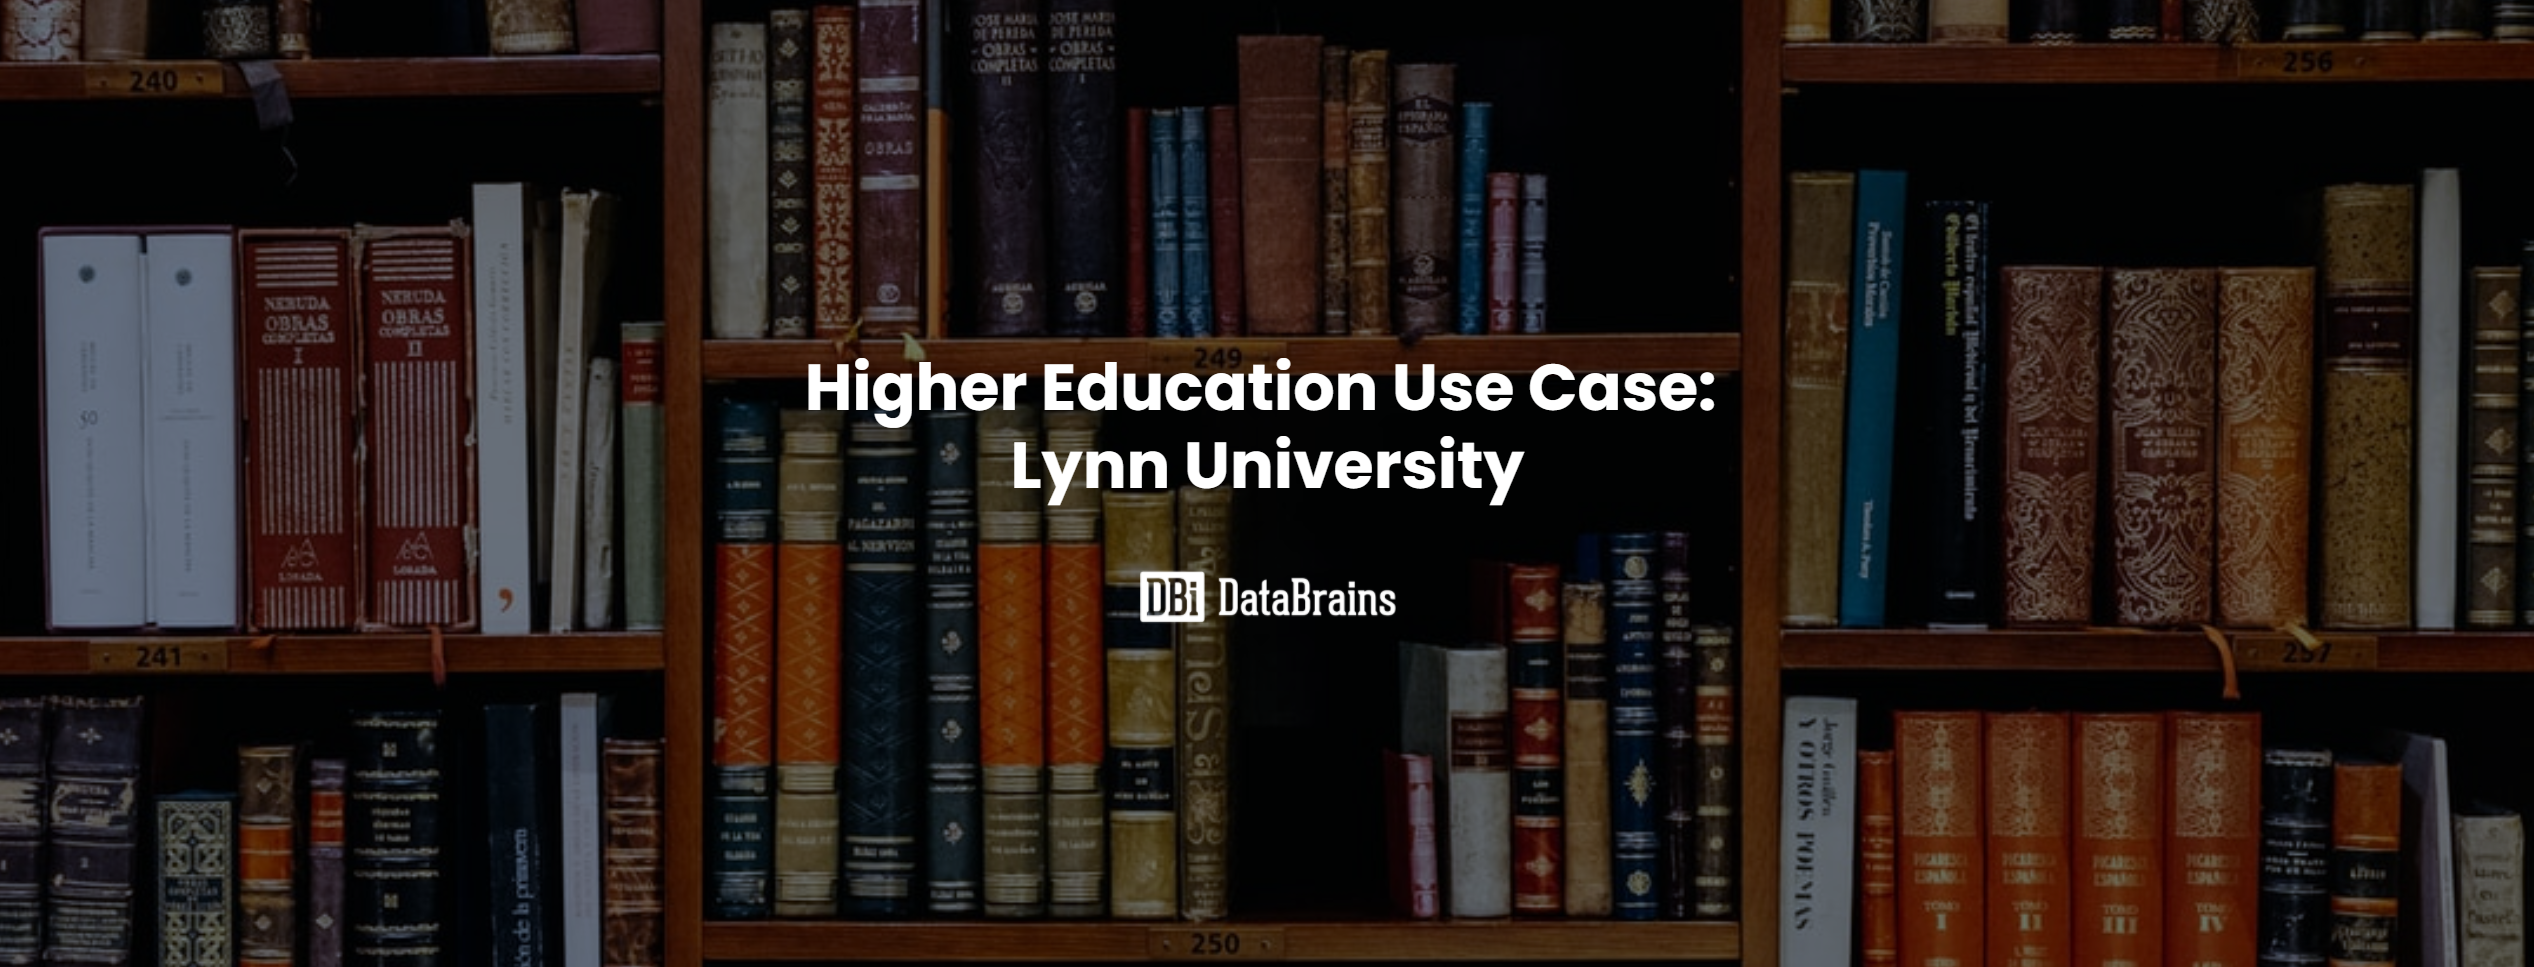 Higher Education Use case: Lynn University